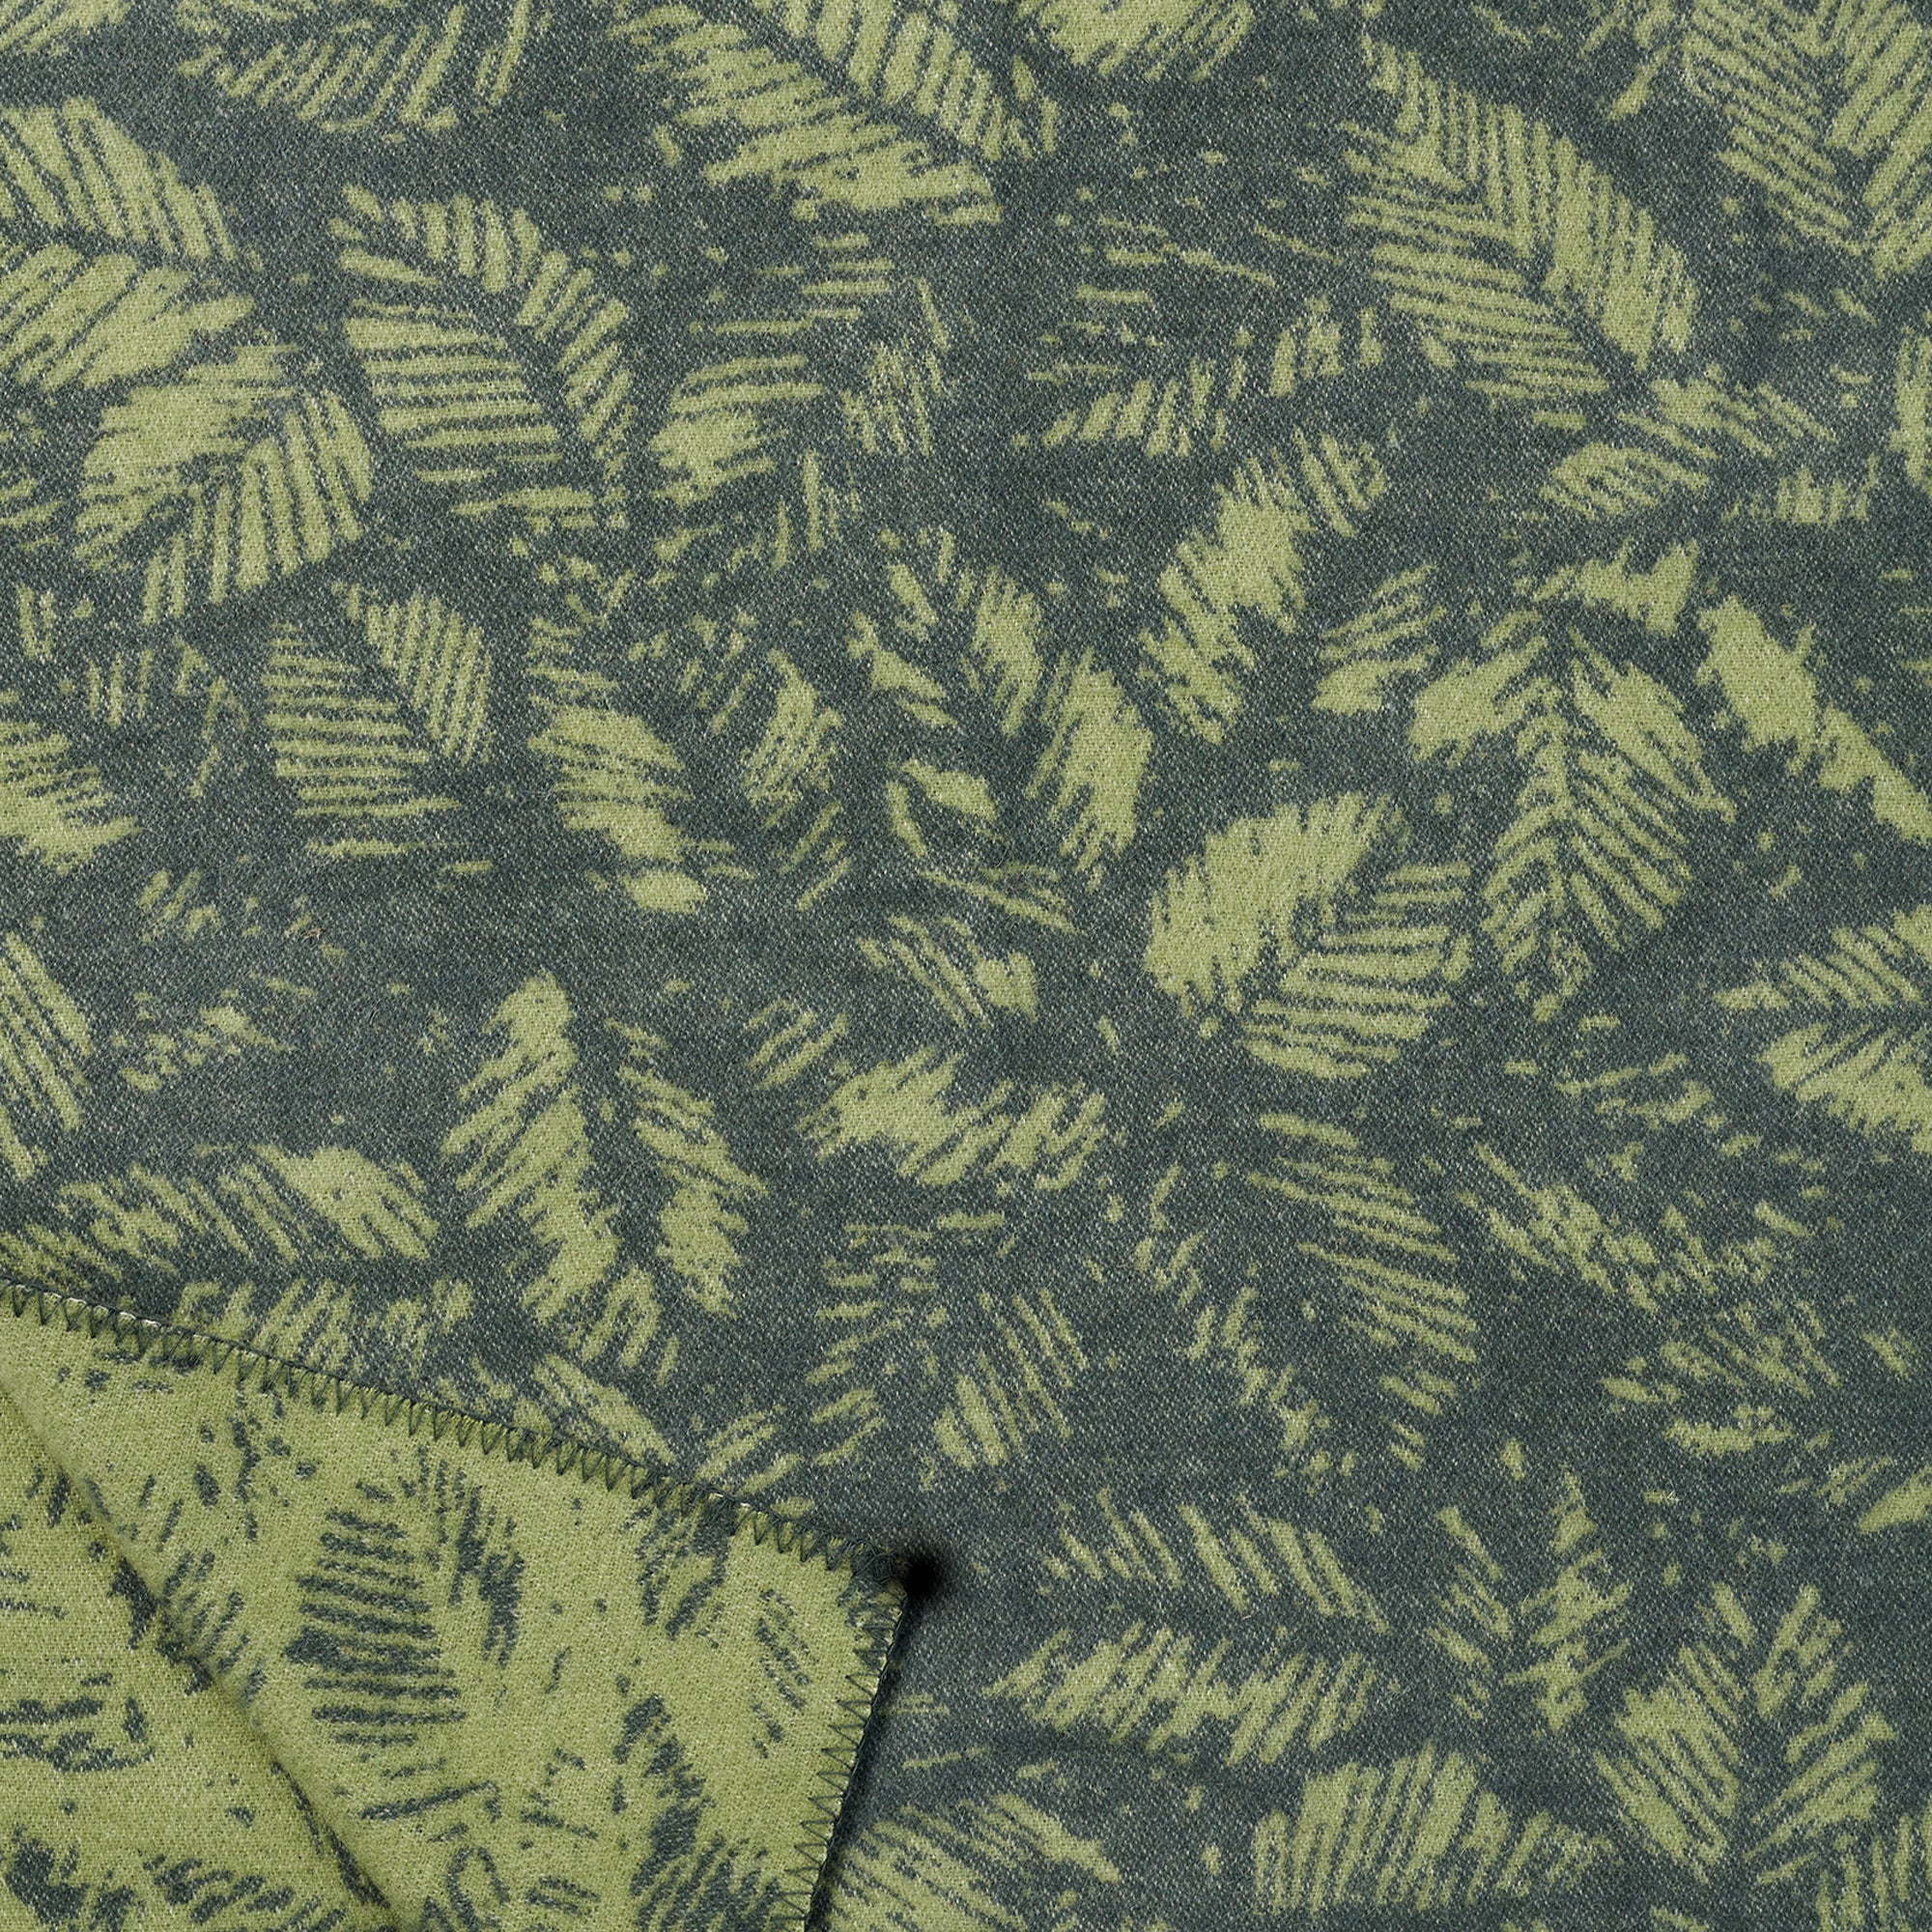 Amorina Green 130x180cm Merino & Lambswool Blanket